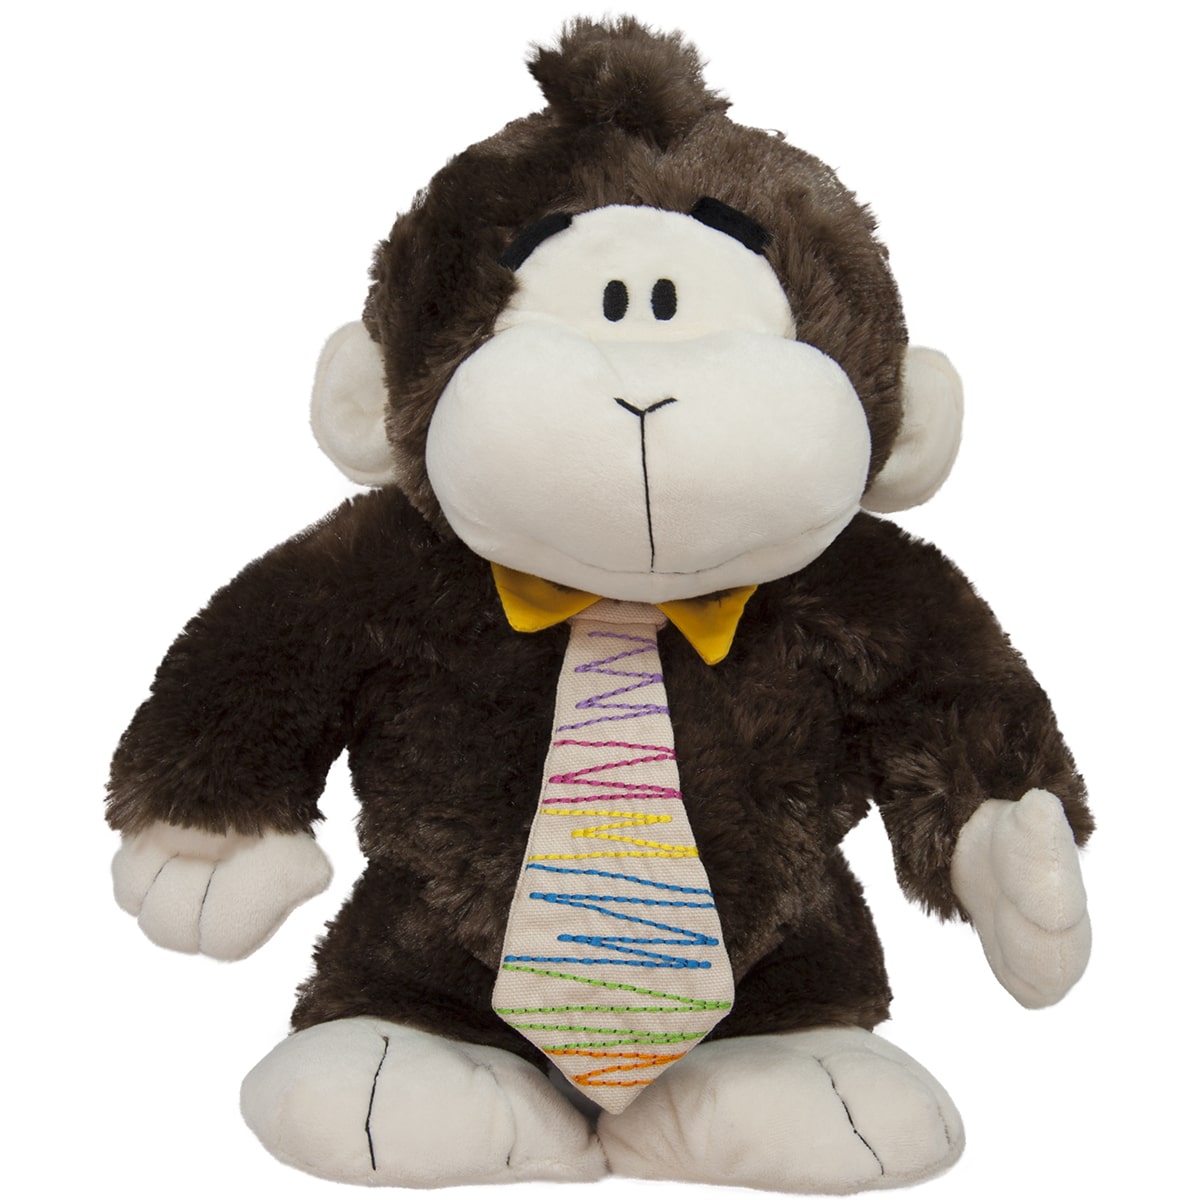 Monkey with a tie